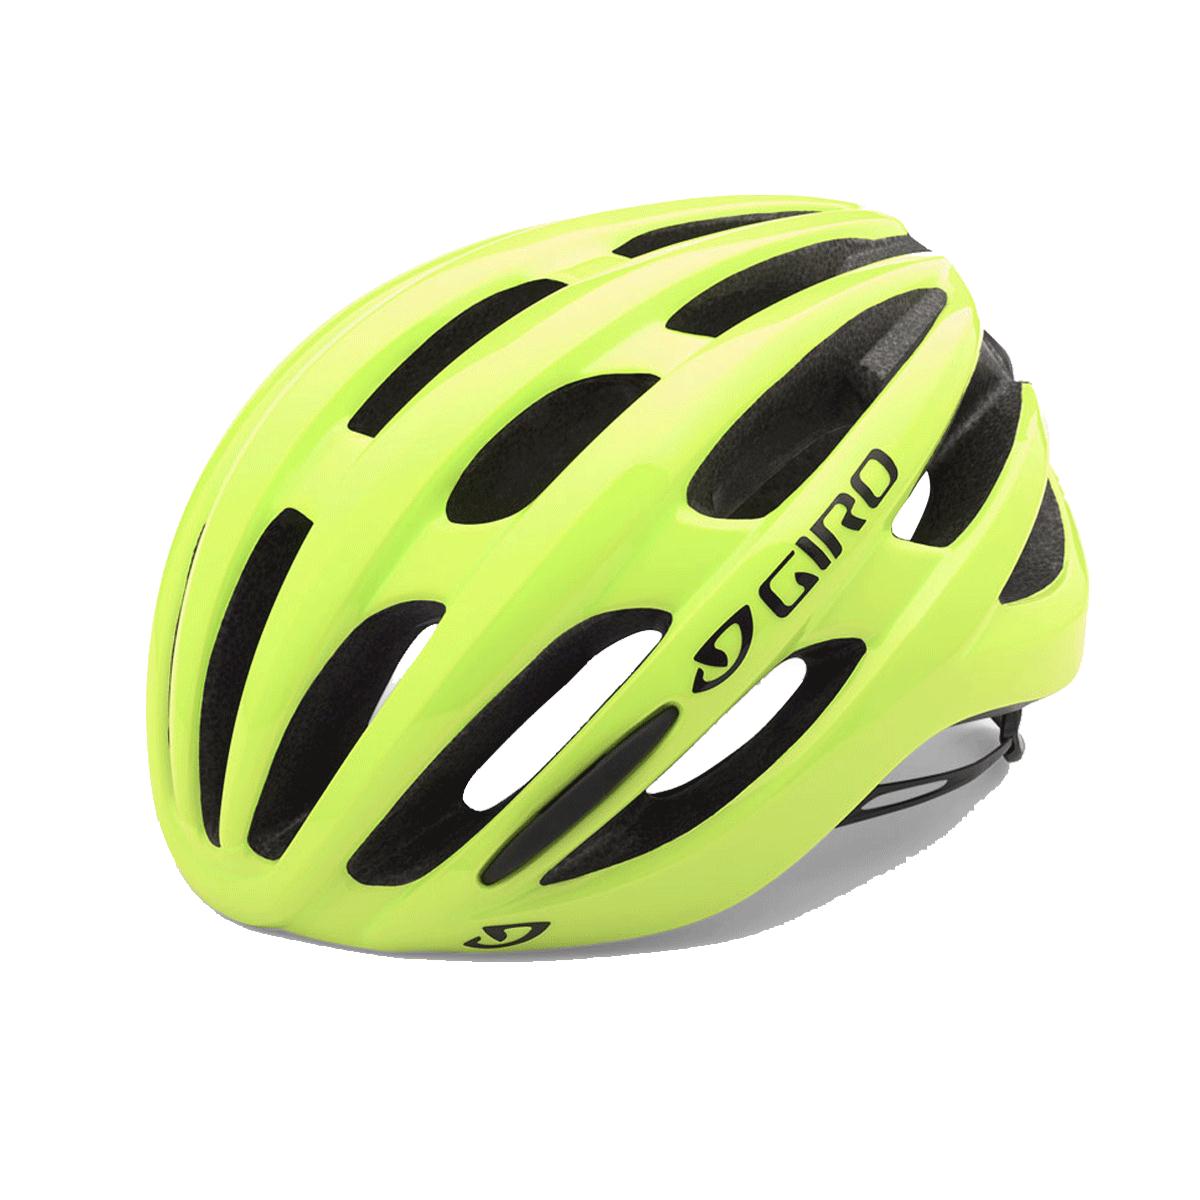 GIRO Foray, Road Helmet-Highlight Yellow-Medium